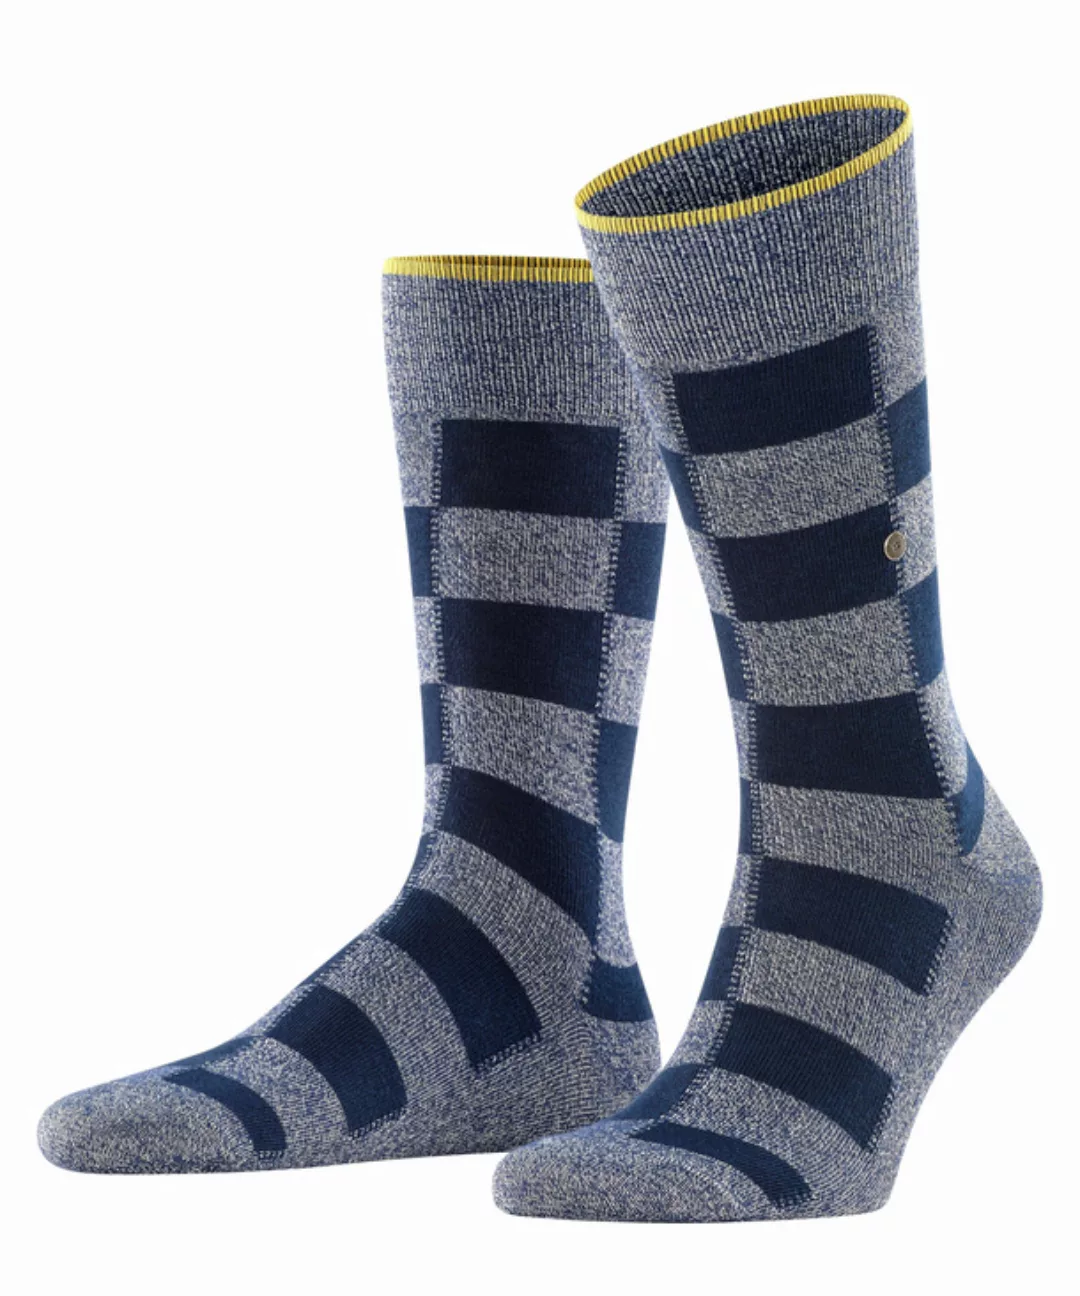 Burlington Indigo Herren Socken, 40-46, Blau, AnderesMuster, Baumwolle, 219 günstig online kaufen